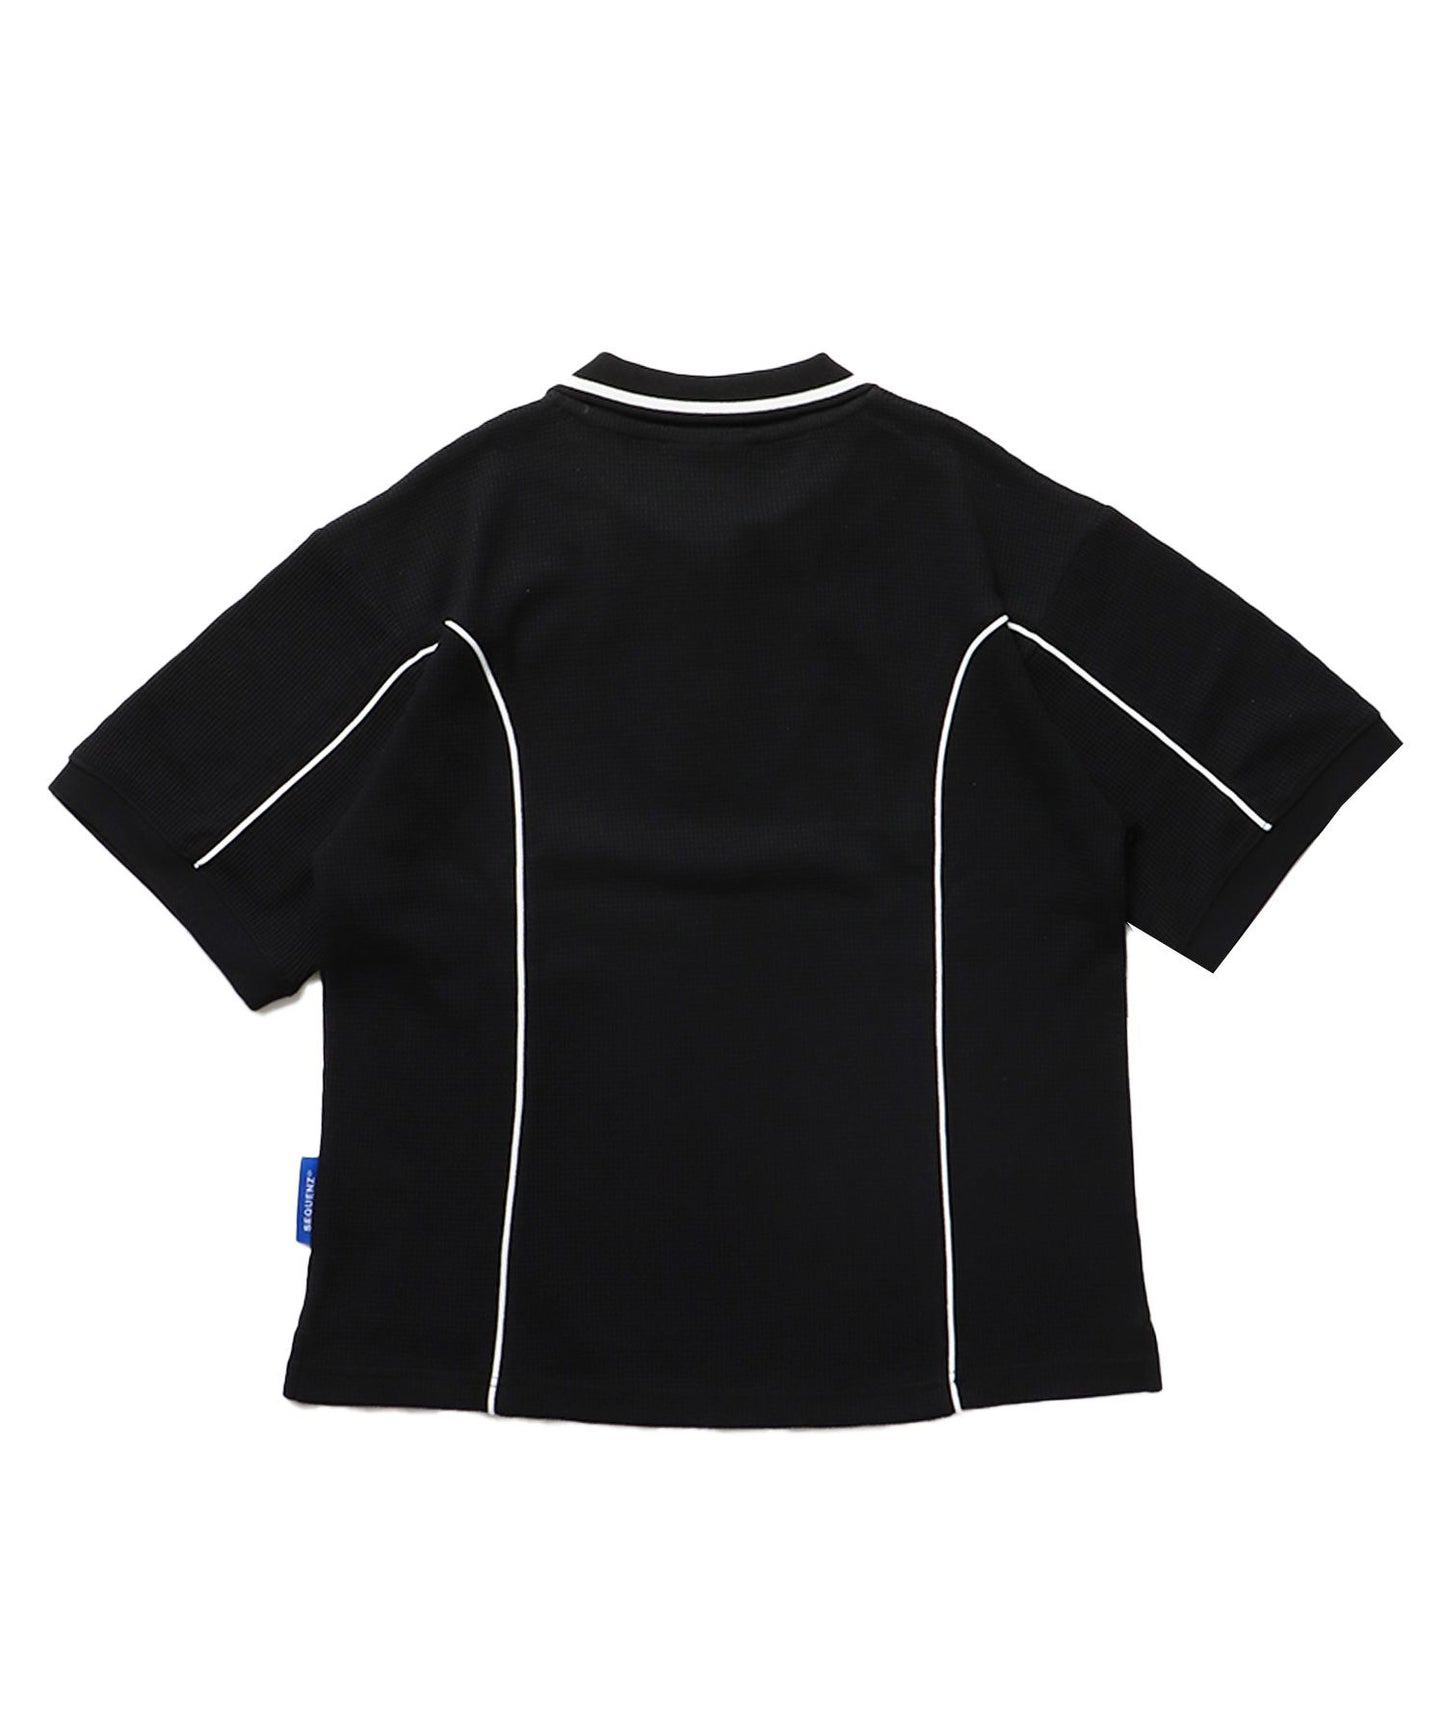 【SEQUENZ】SQNZ SPORT ZIP POLO S/S THERMAL / 衿付き ポロシャツ 配色 パイピング ブランドロゴ ワンポイント ハーフジップ スポーティー Tシャツ ゲームシャツ 襟ライン ブラック